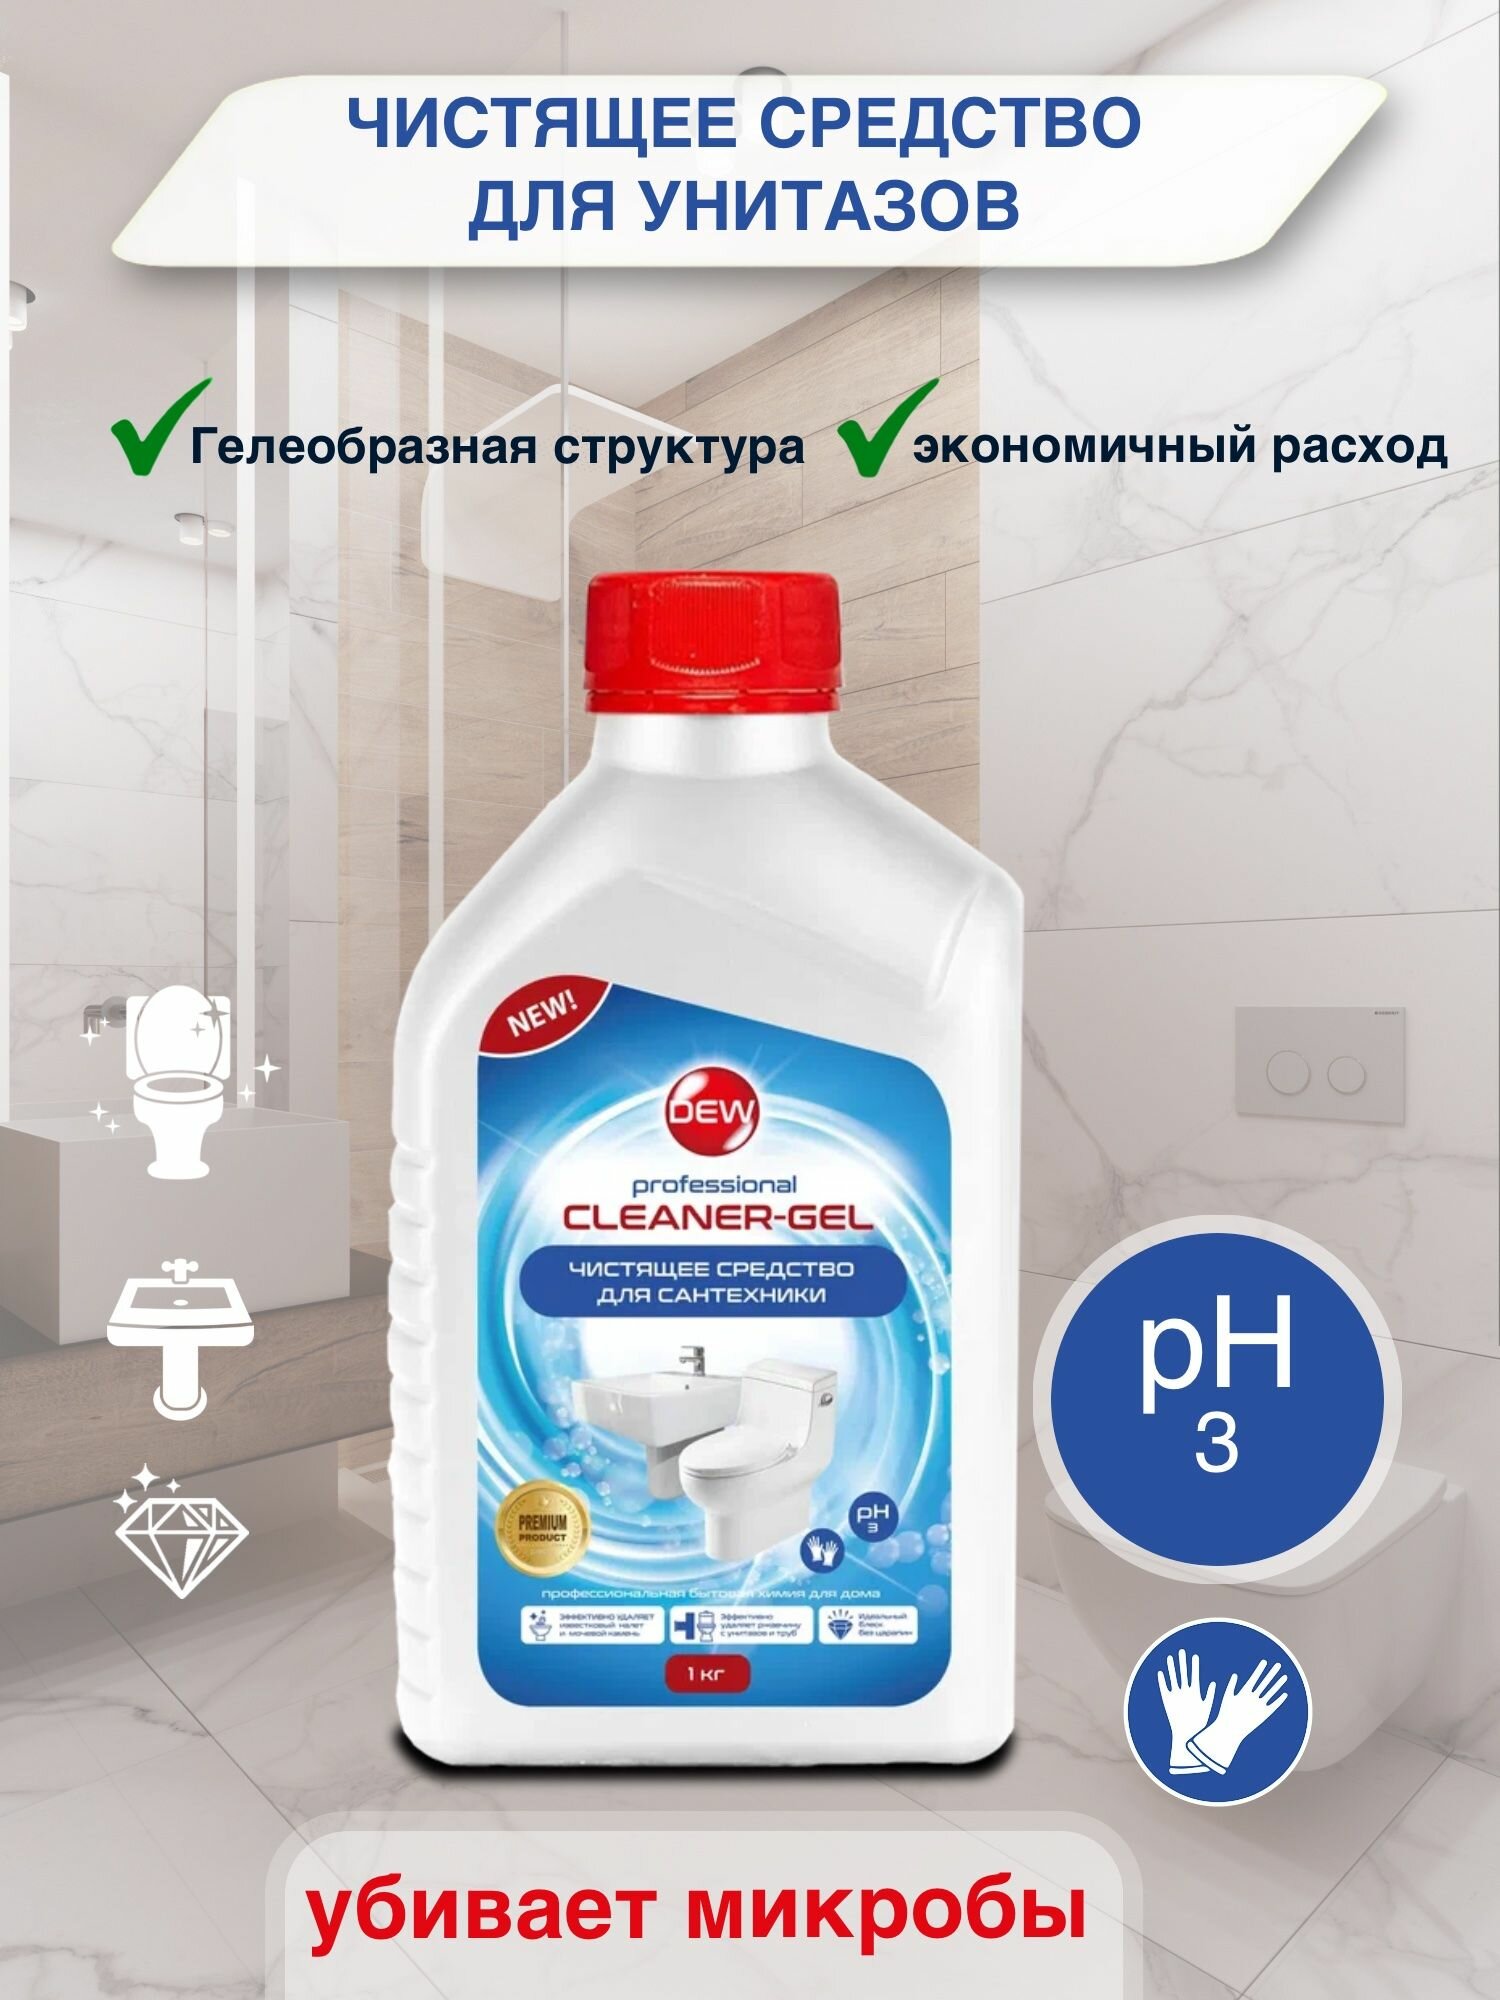 DEW Cleaner-gel Professional чистящее средство для сантехники 075 л утенок